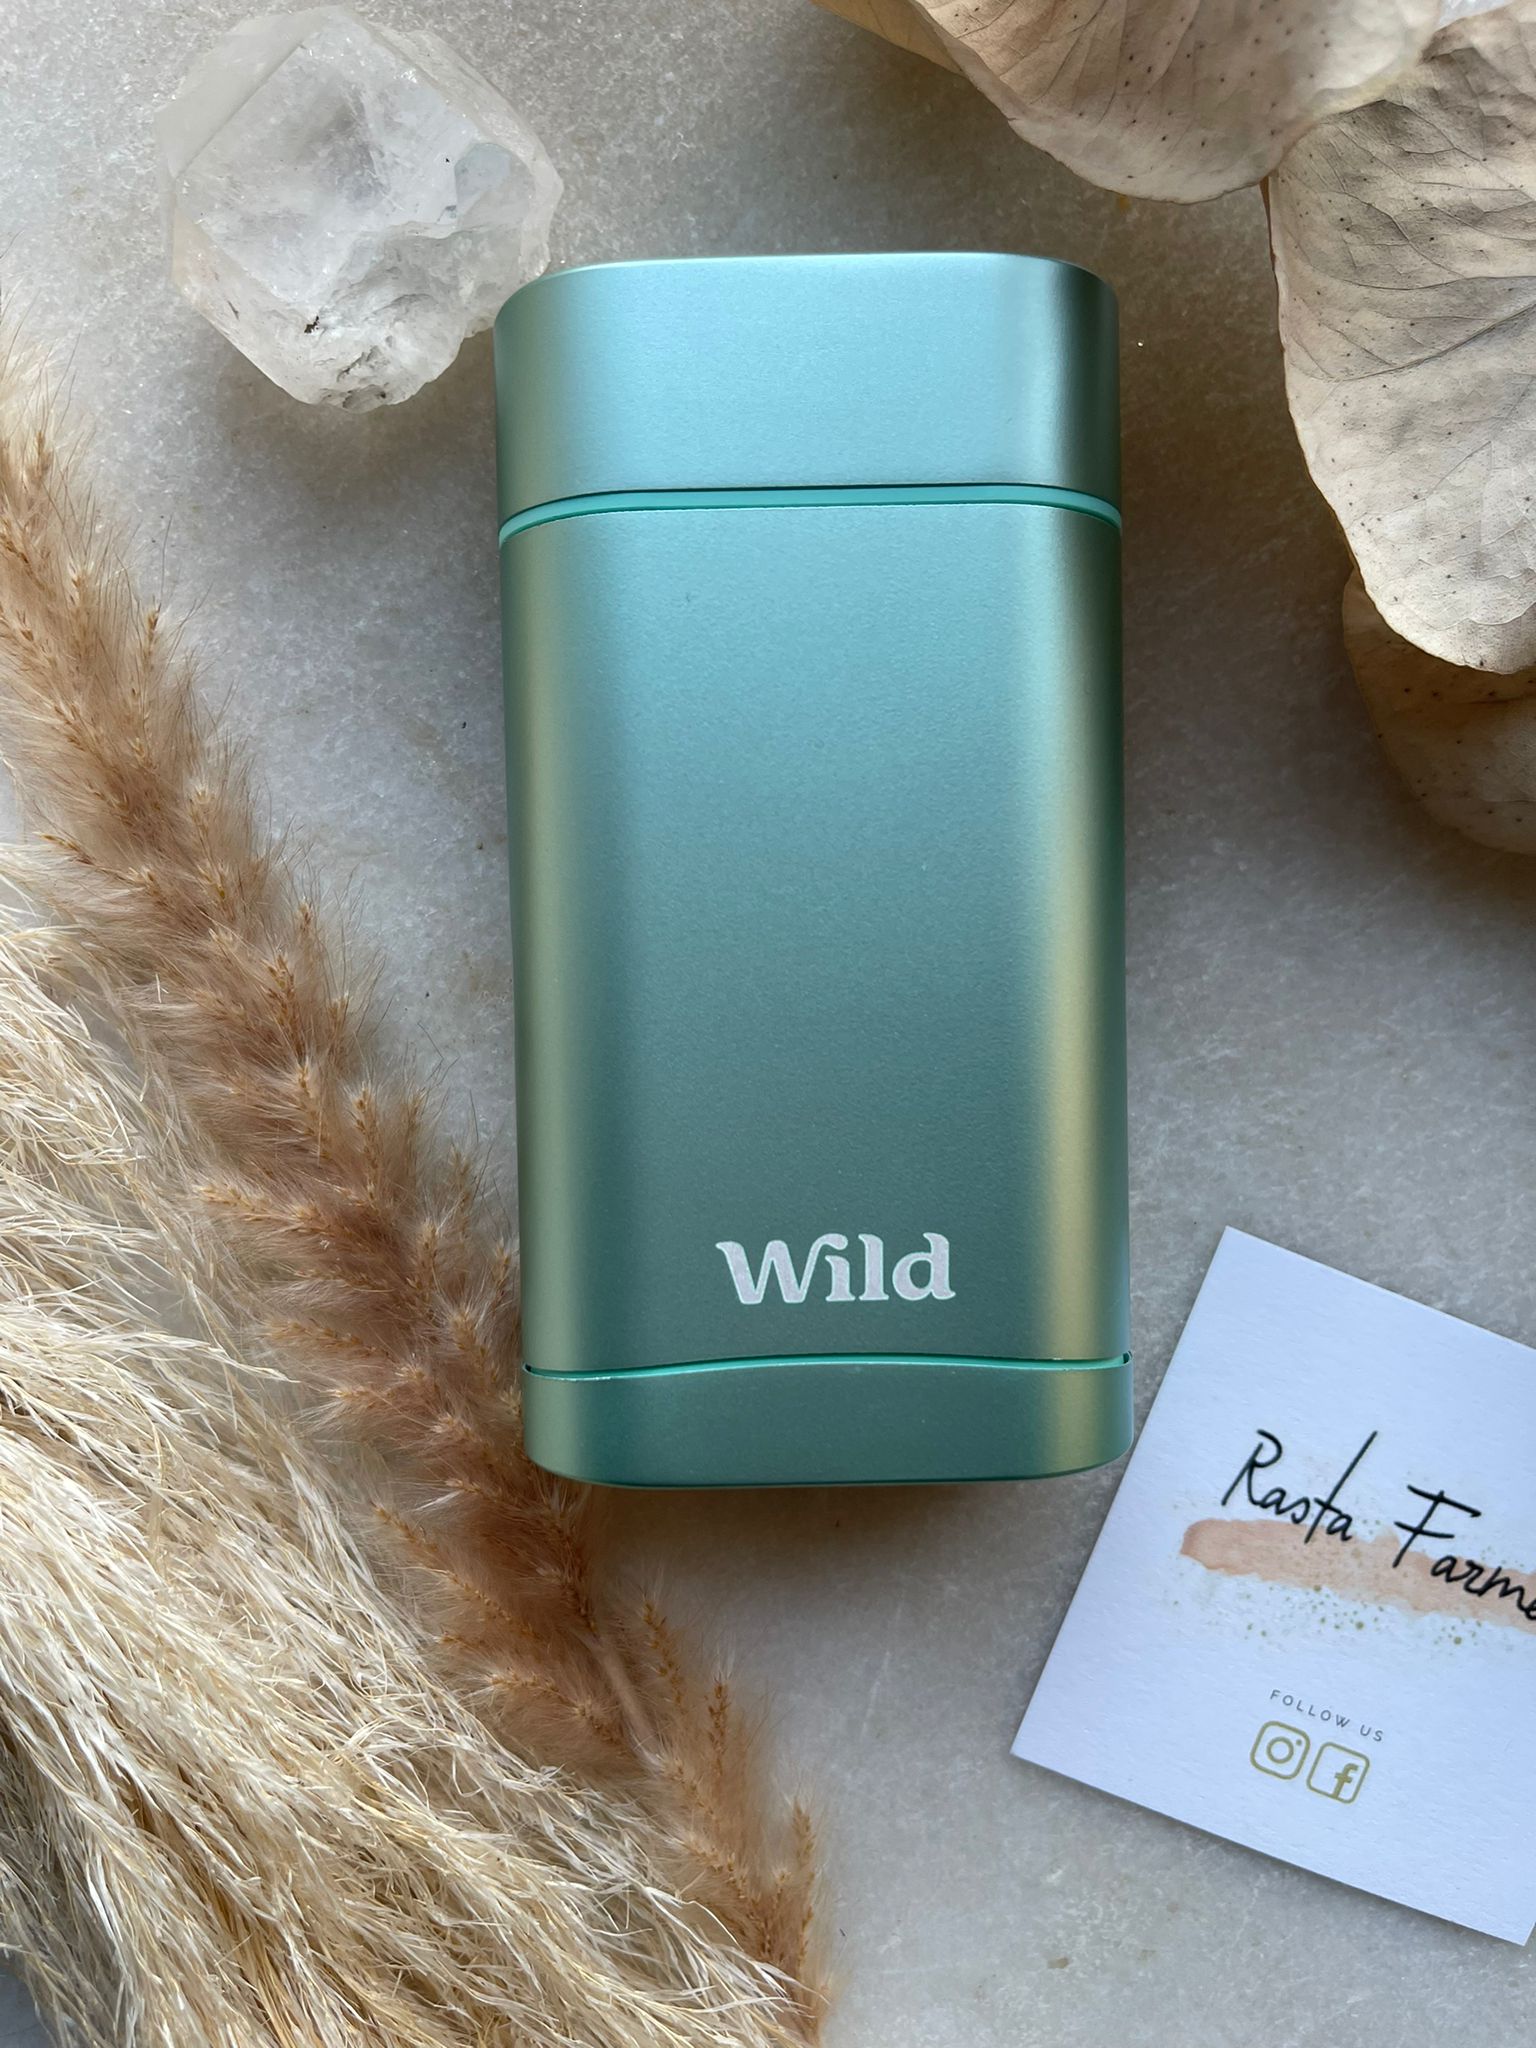 Refillable Deodorant - Wild